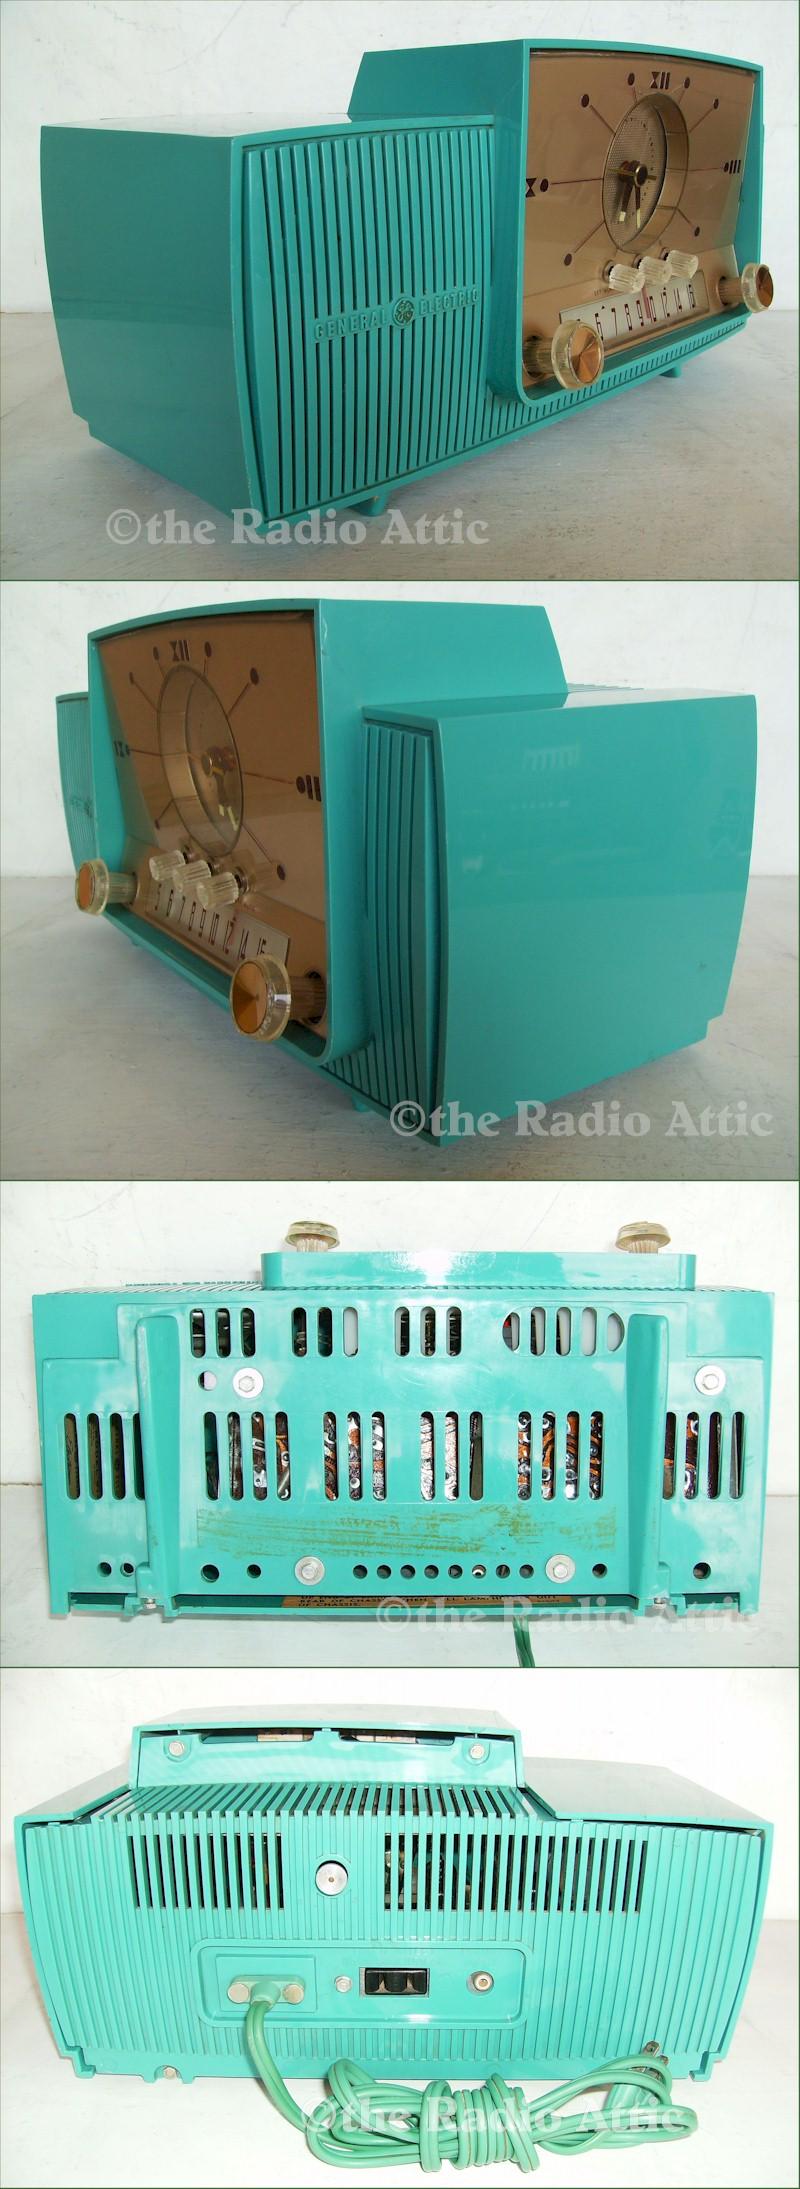 General Electric 914-D Clock Radio (1957)